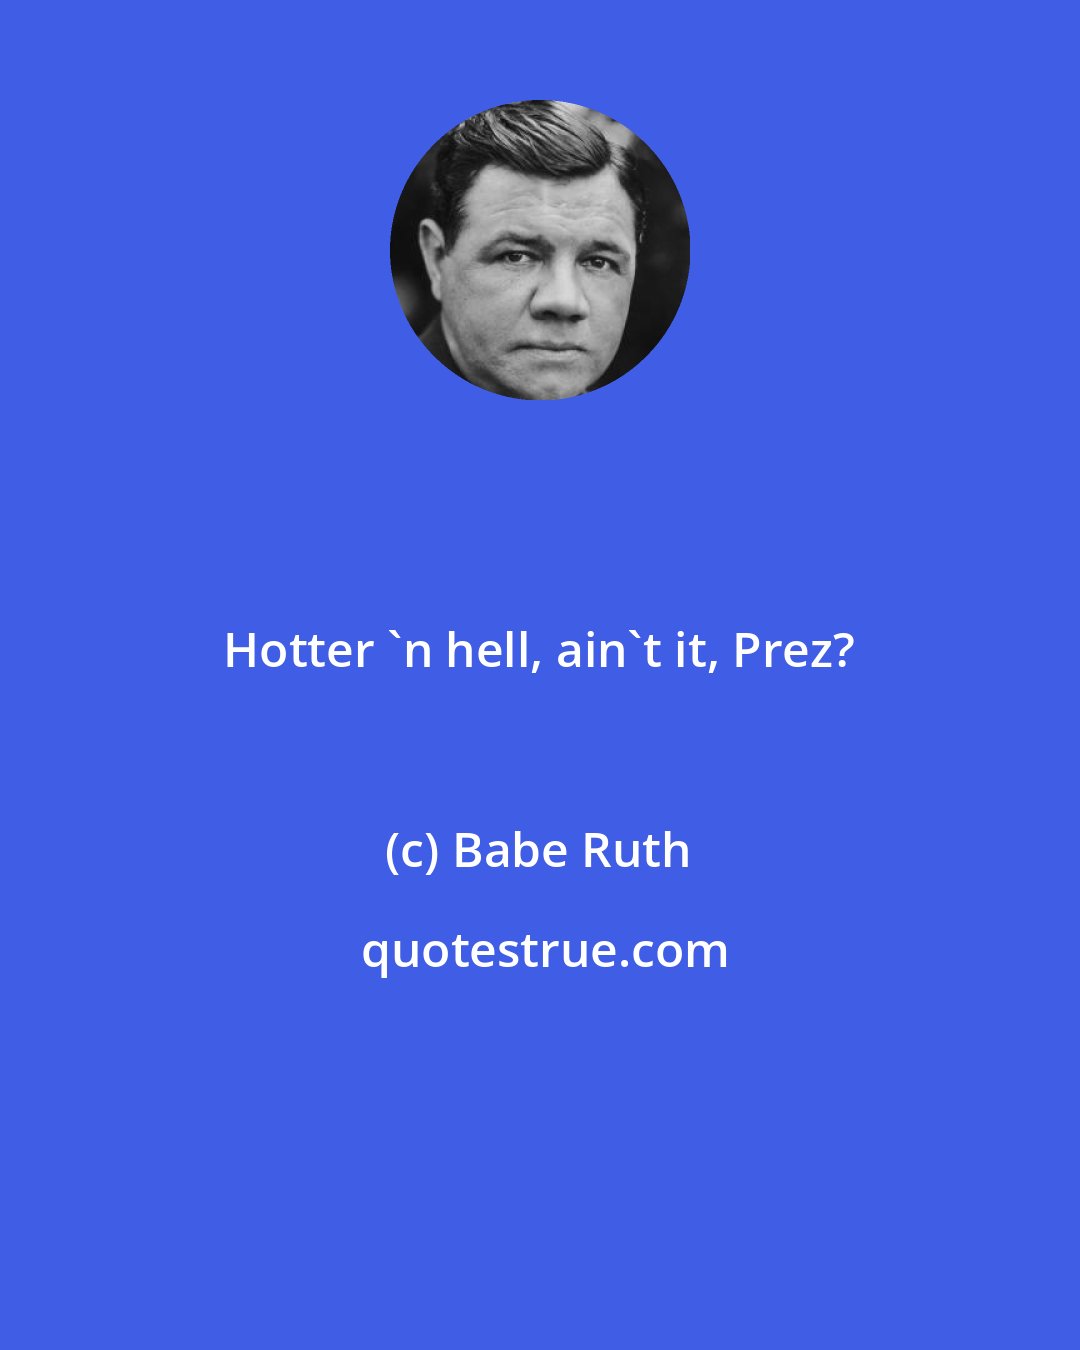 Babe Ruth: Hotter 'n hell, ain't it, Prez?